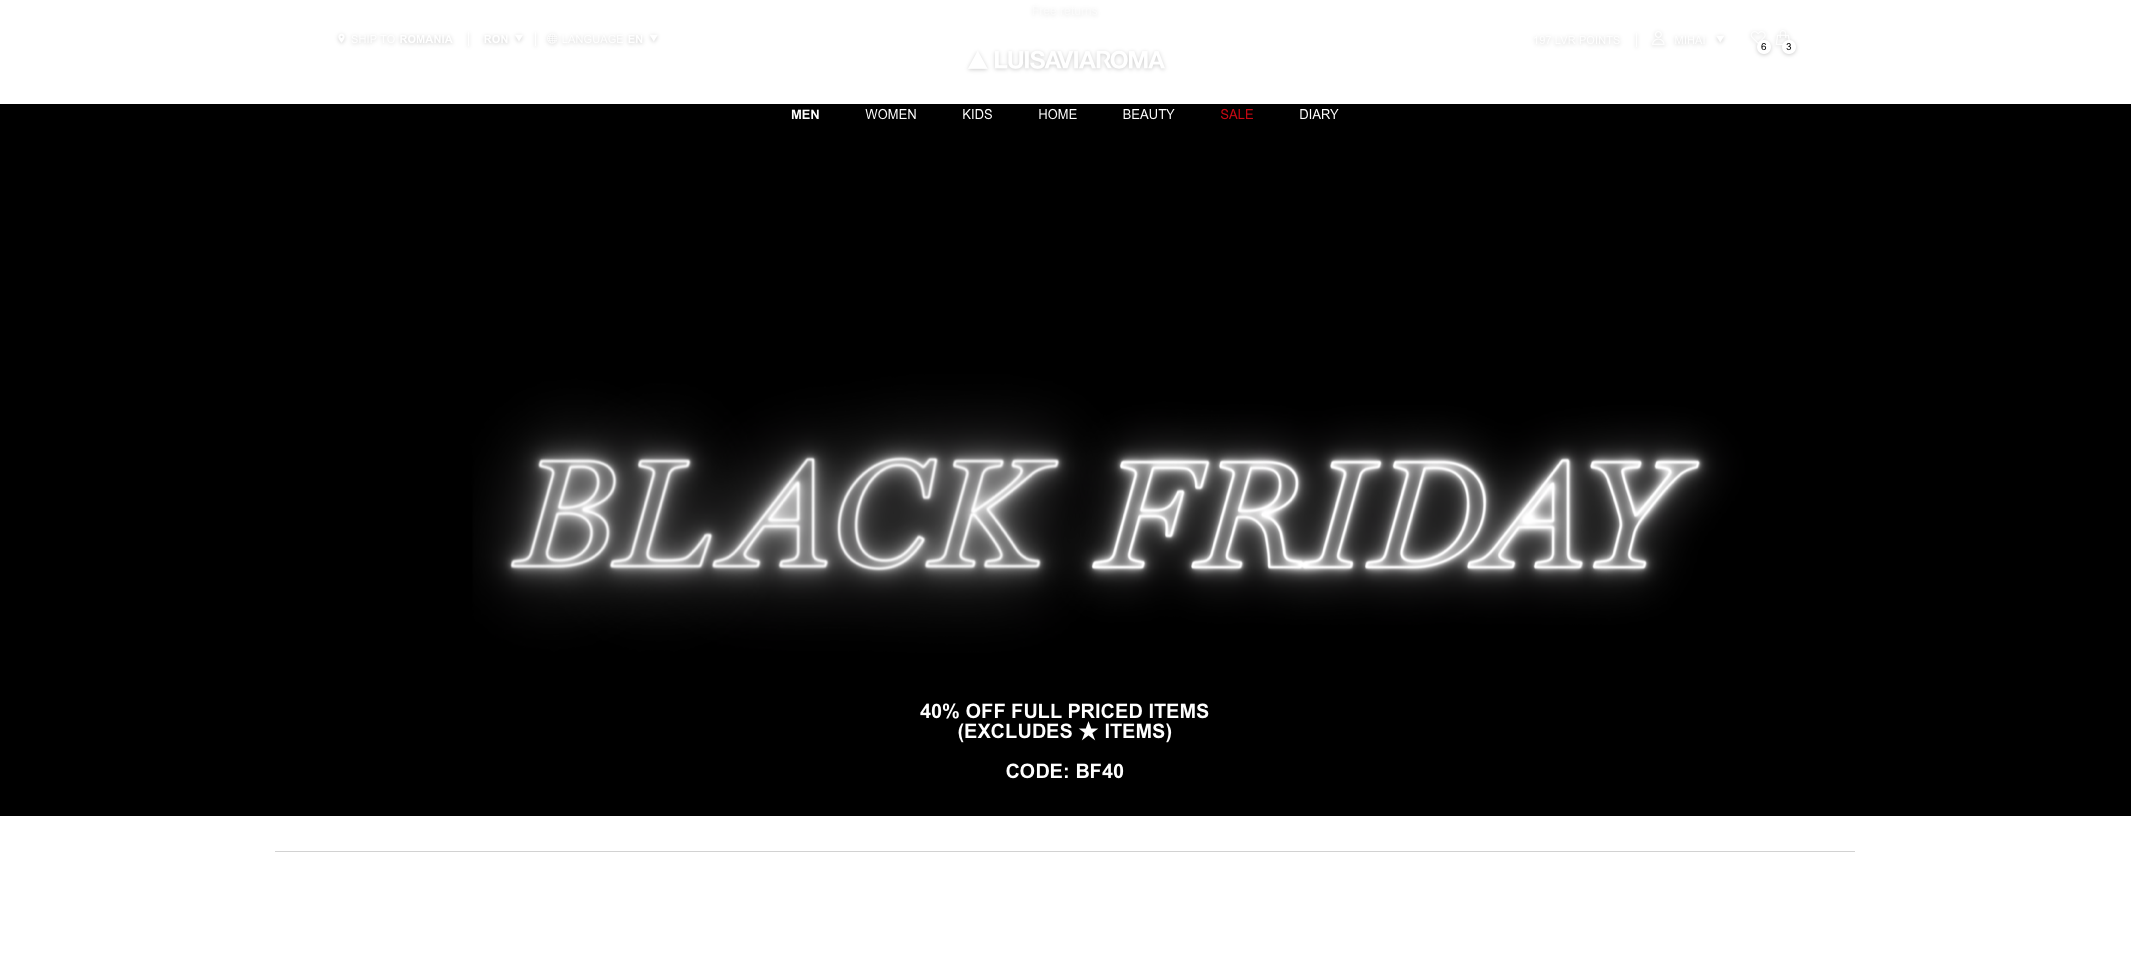 Black Friday online